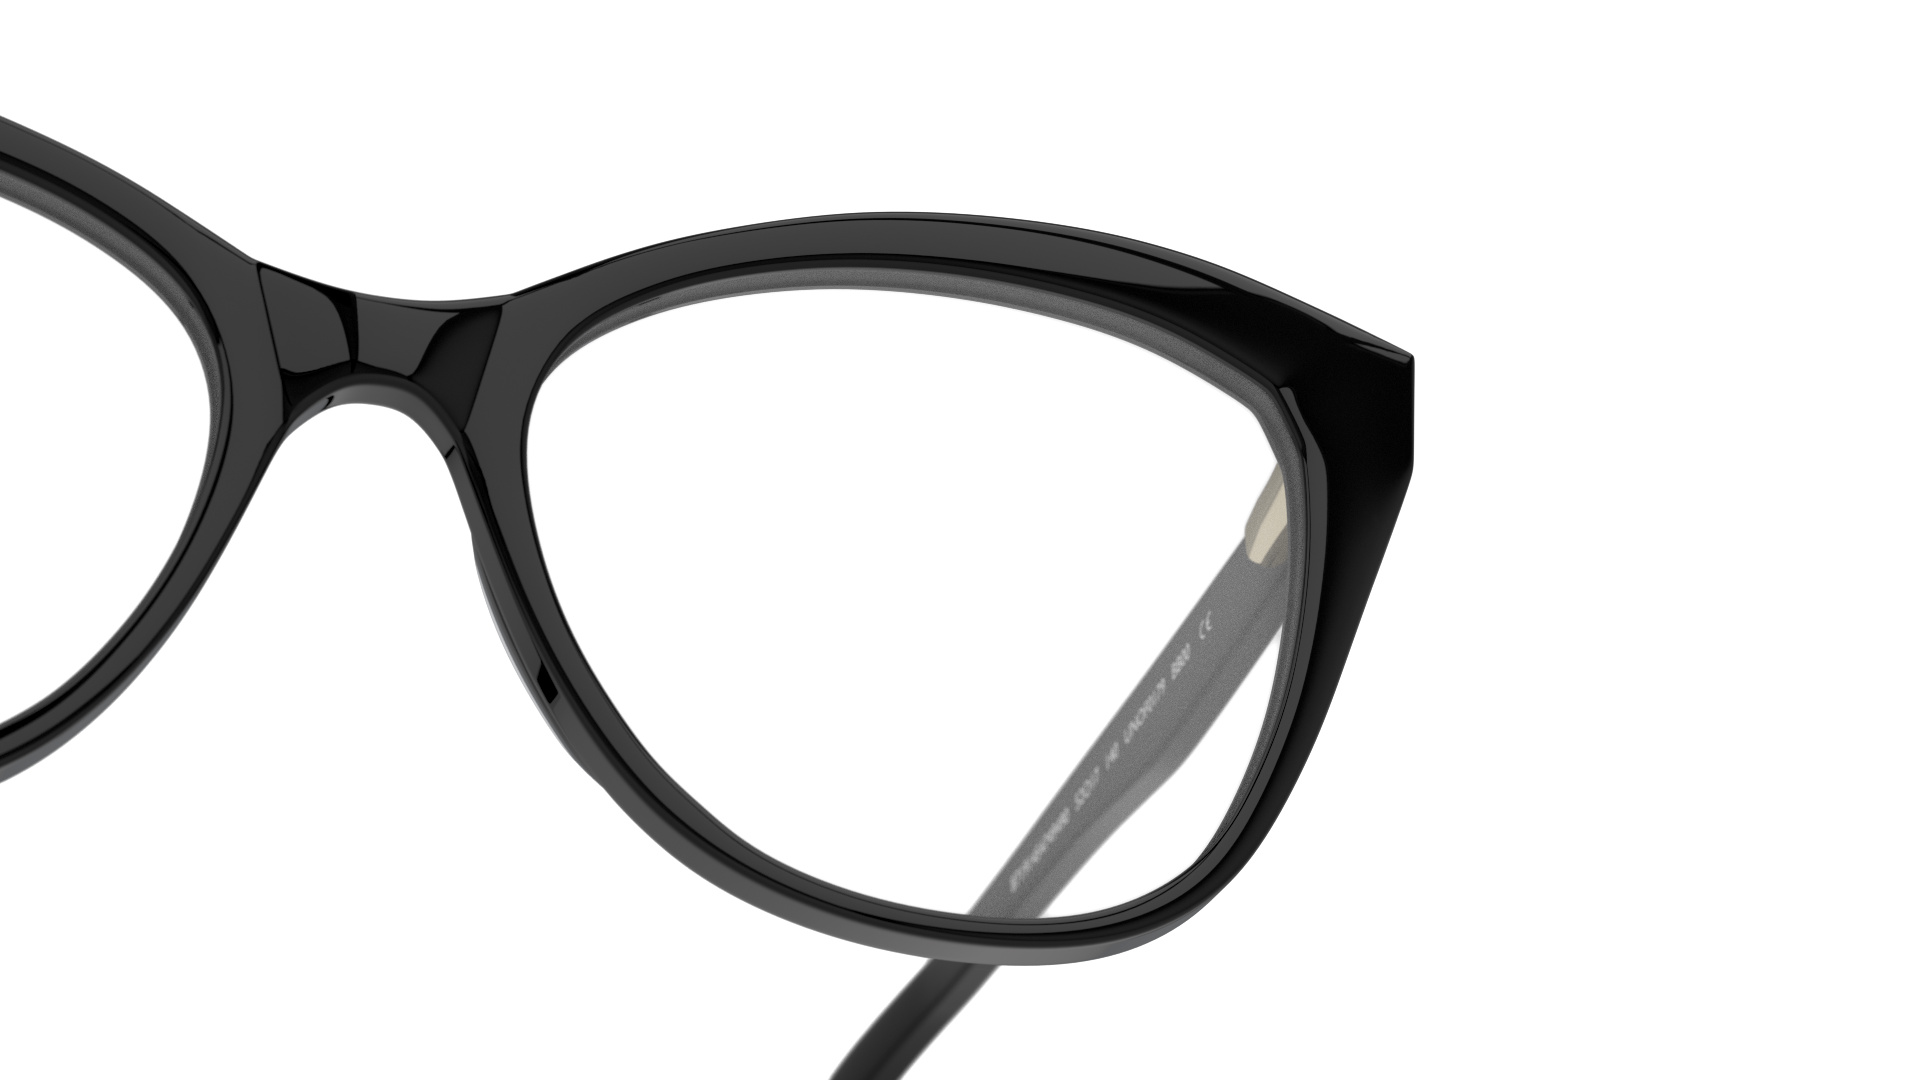 Detail01 Unofficial UNOF0179 Glasses Transparent / Black